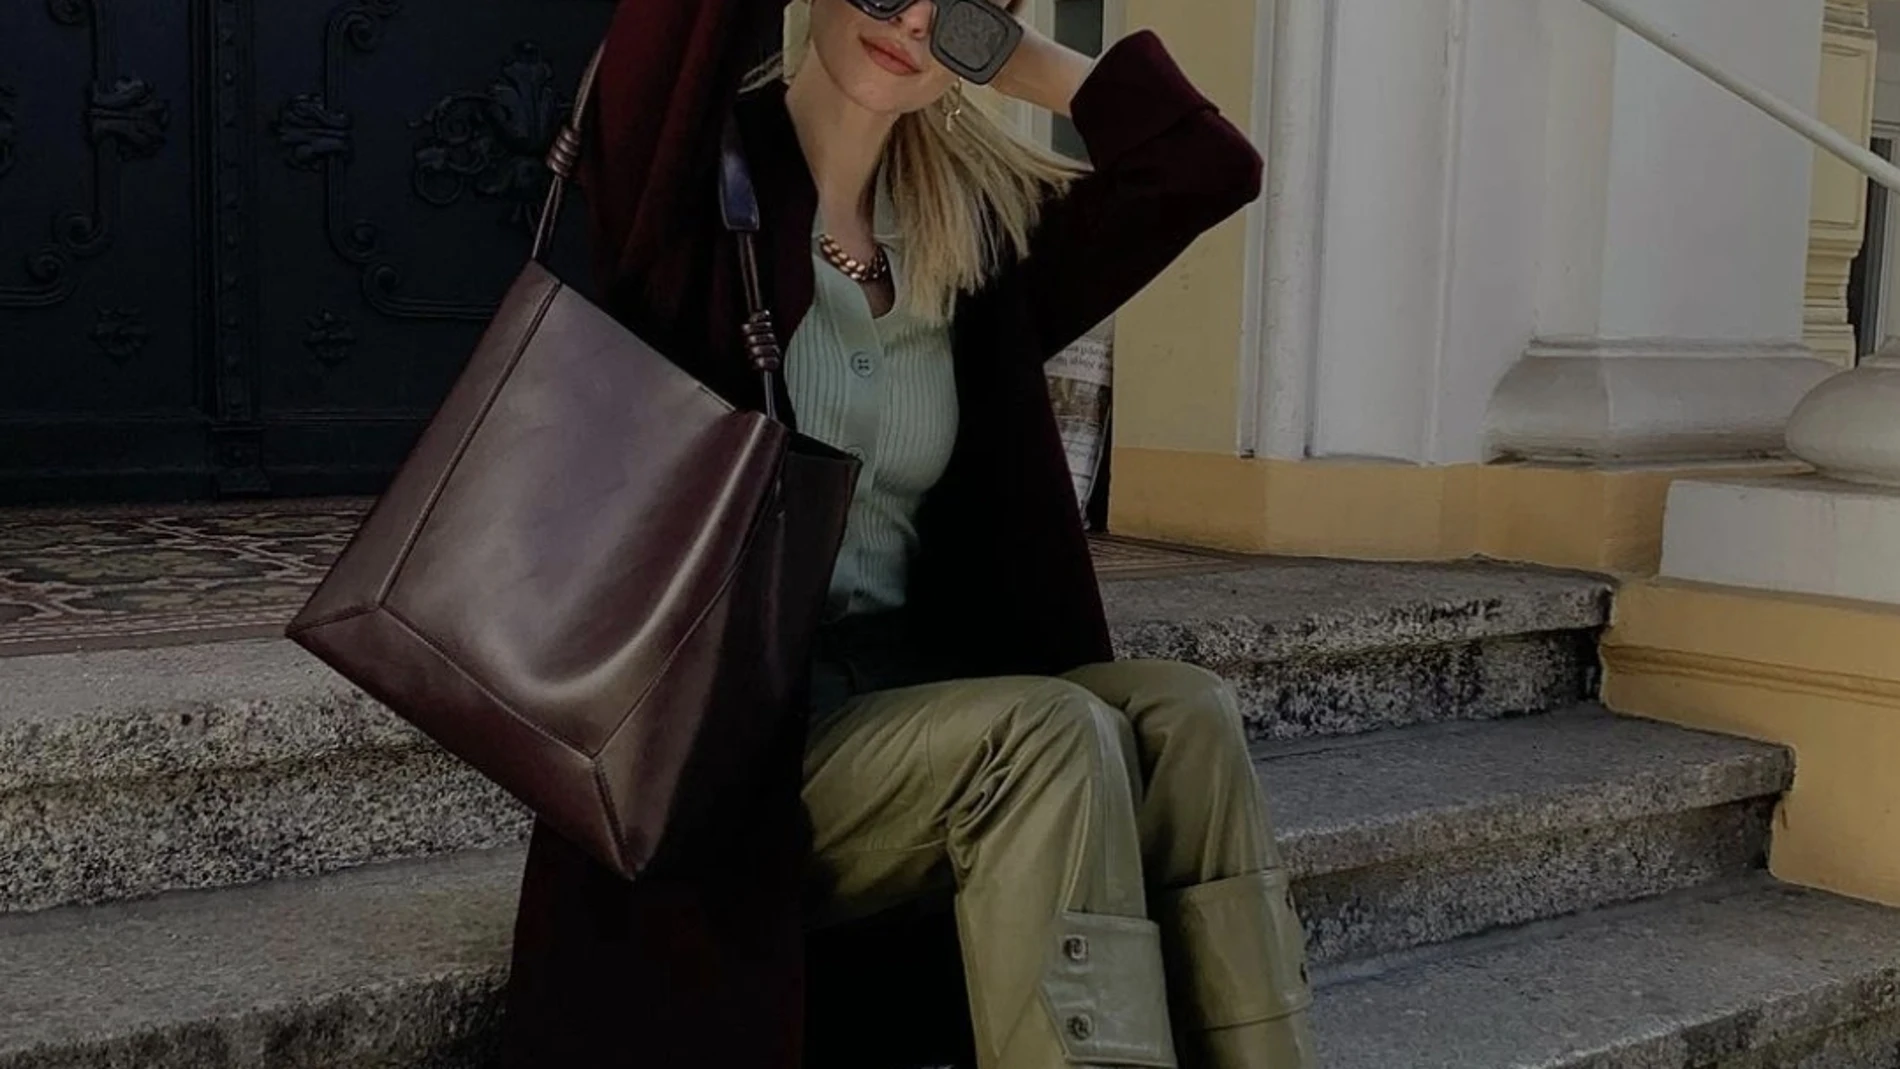 La influencer Leonie Hanne con sandalias de tacón/Instagram @leoniehanne